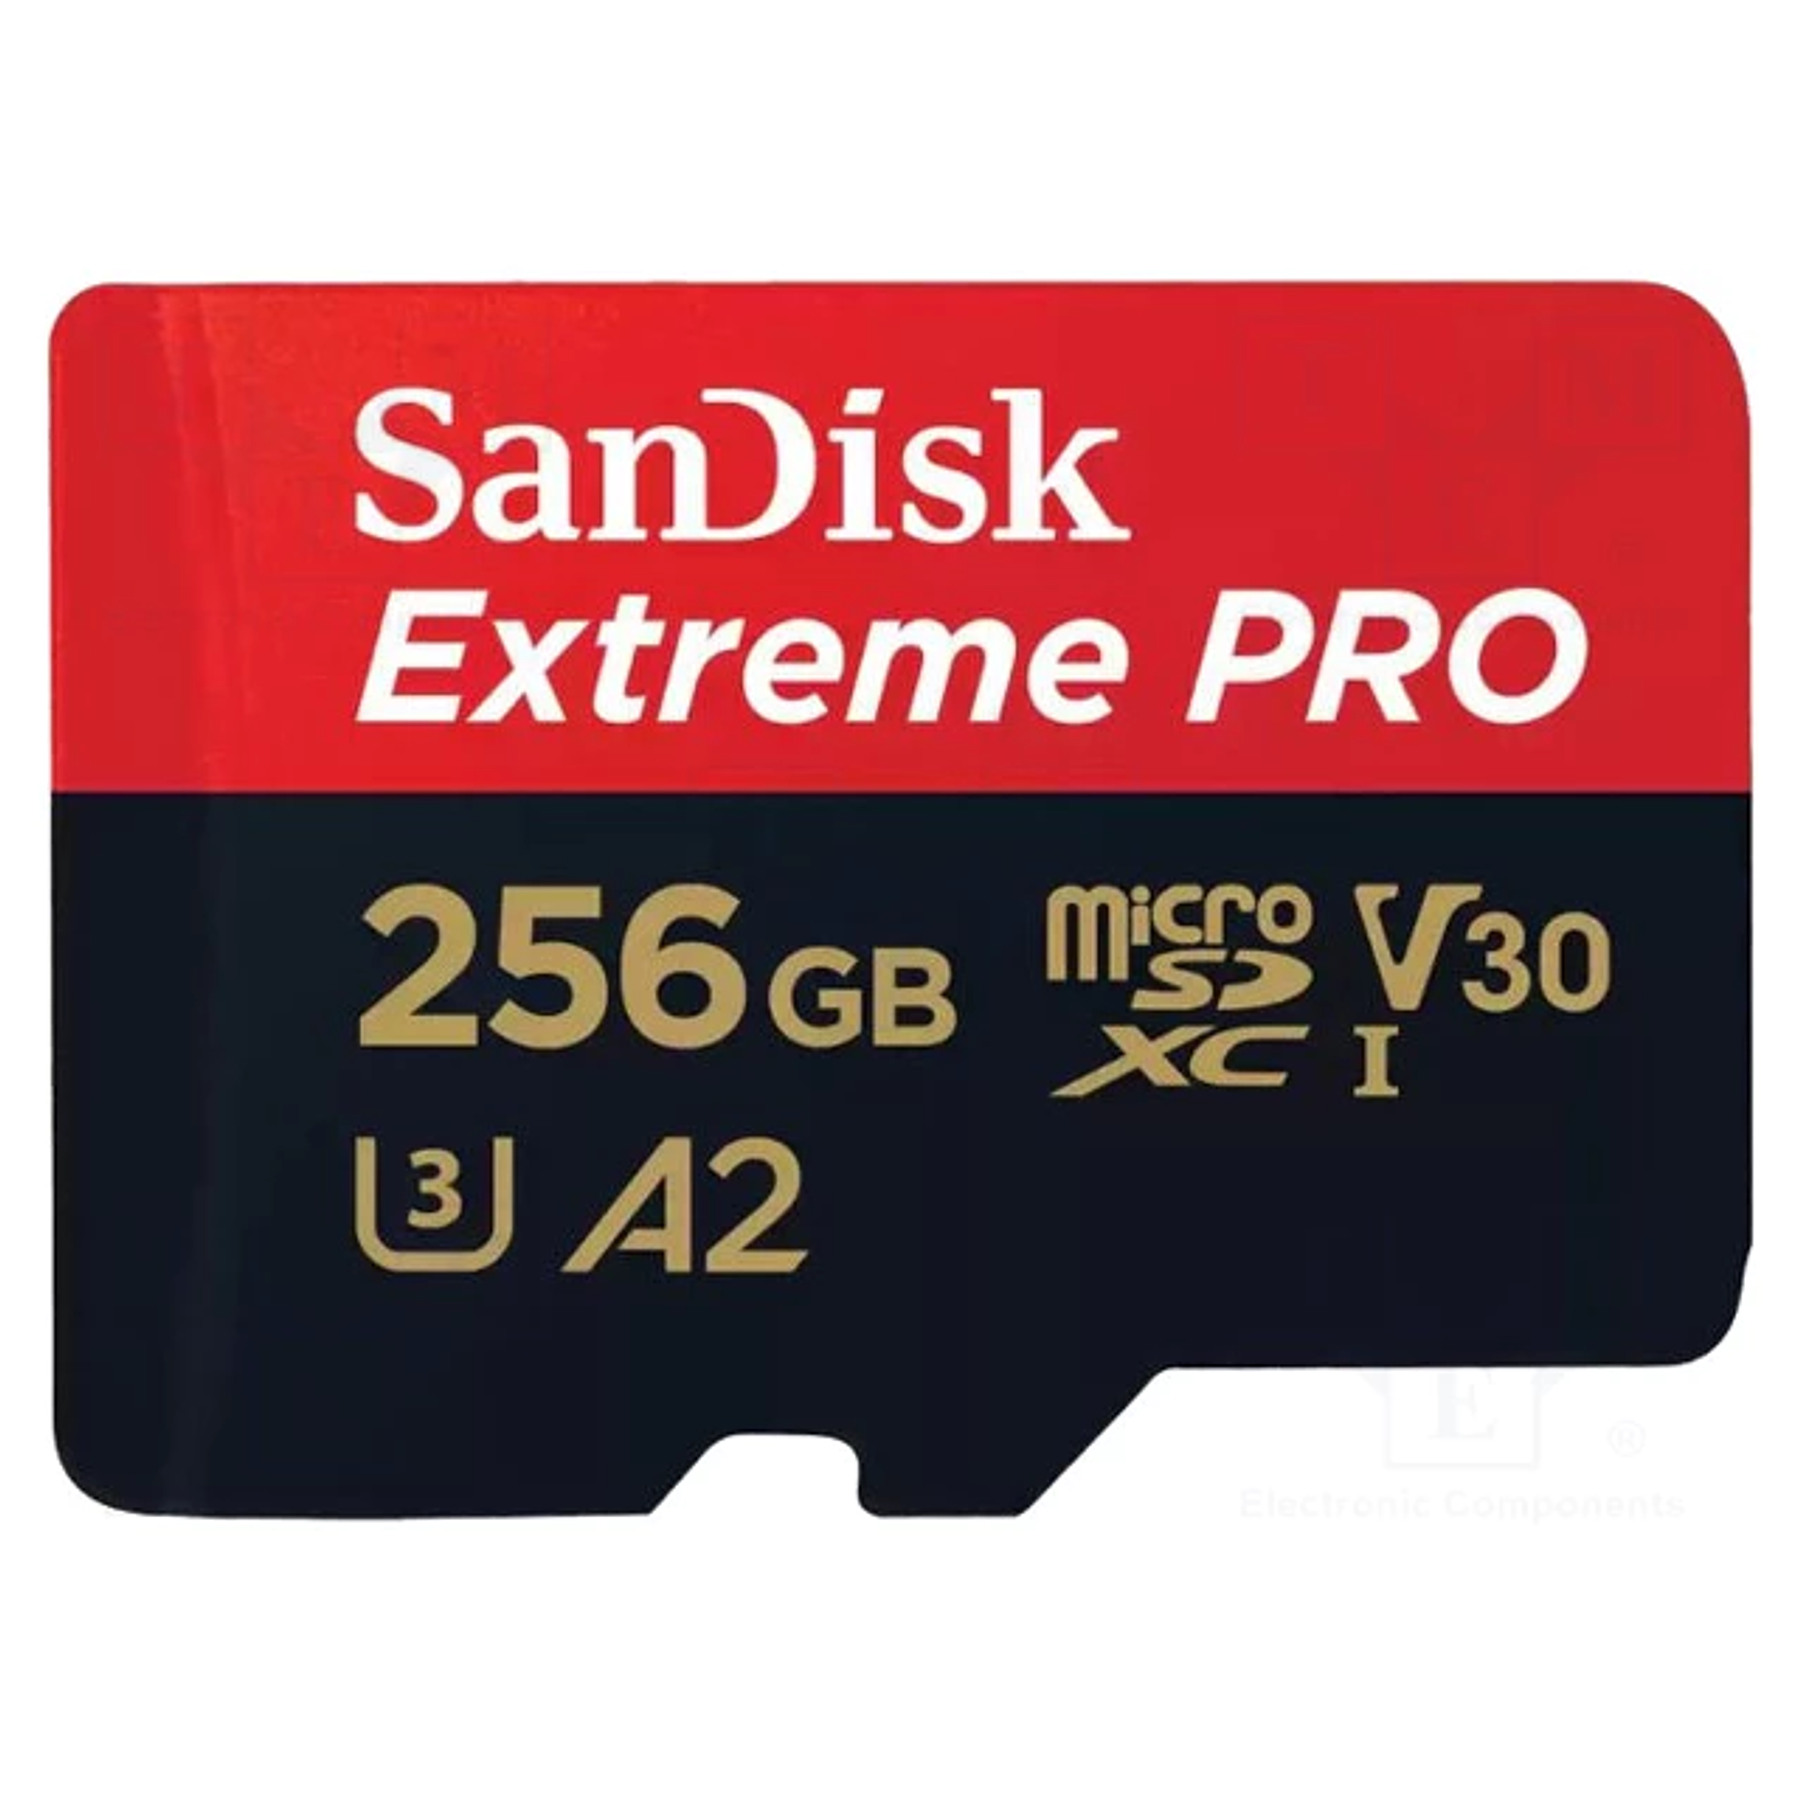 Memoria MicroSDHC 256GB Sandisk Extreme Pro, UHS-I Clase 10, con Adaptador, Up to 200 MB/s- 